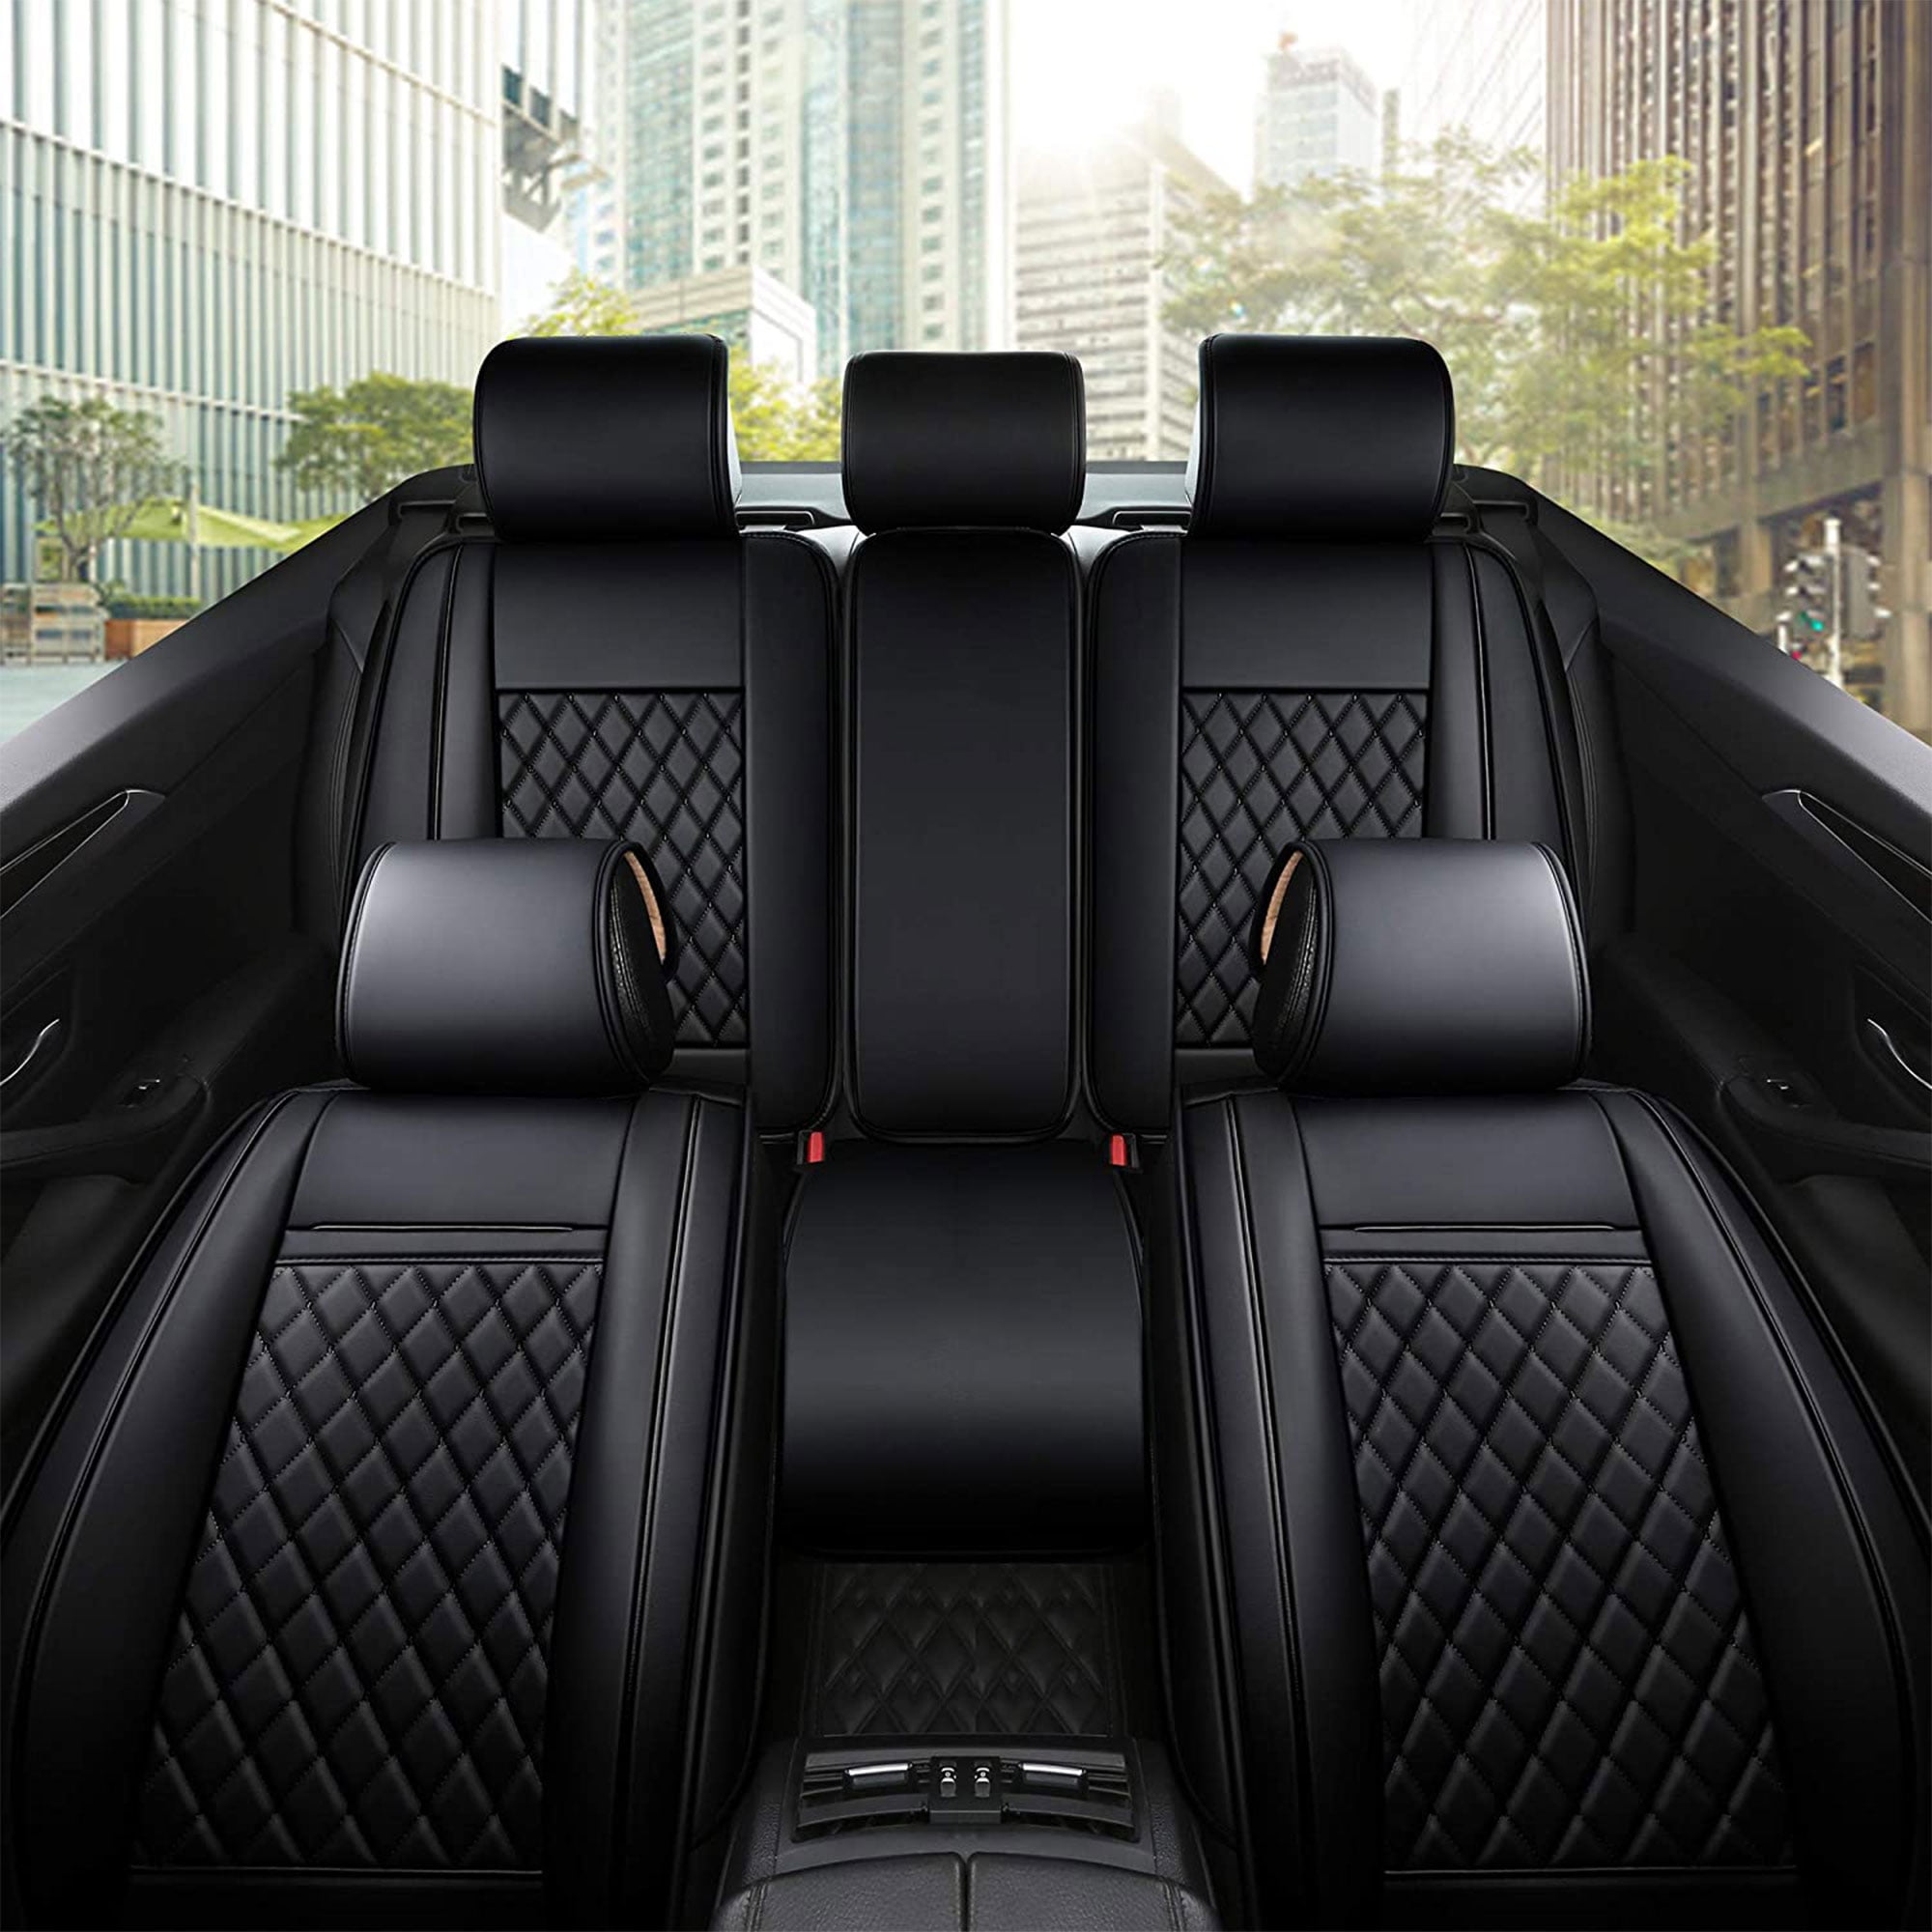 Inch Empire Universal Car Seat Covers  Cushions, Full Set, Black 